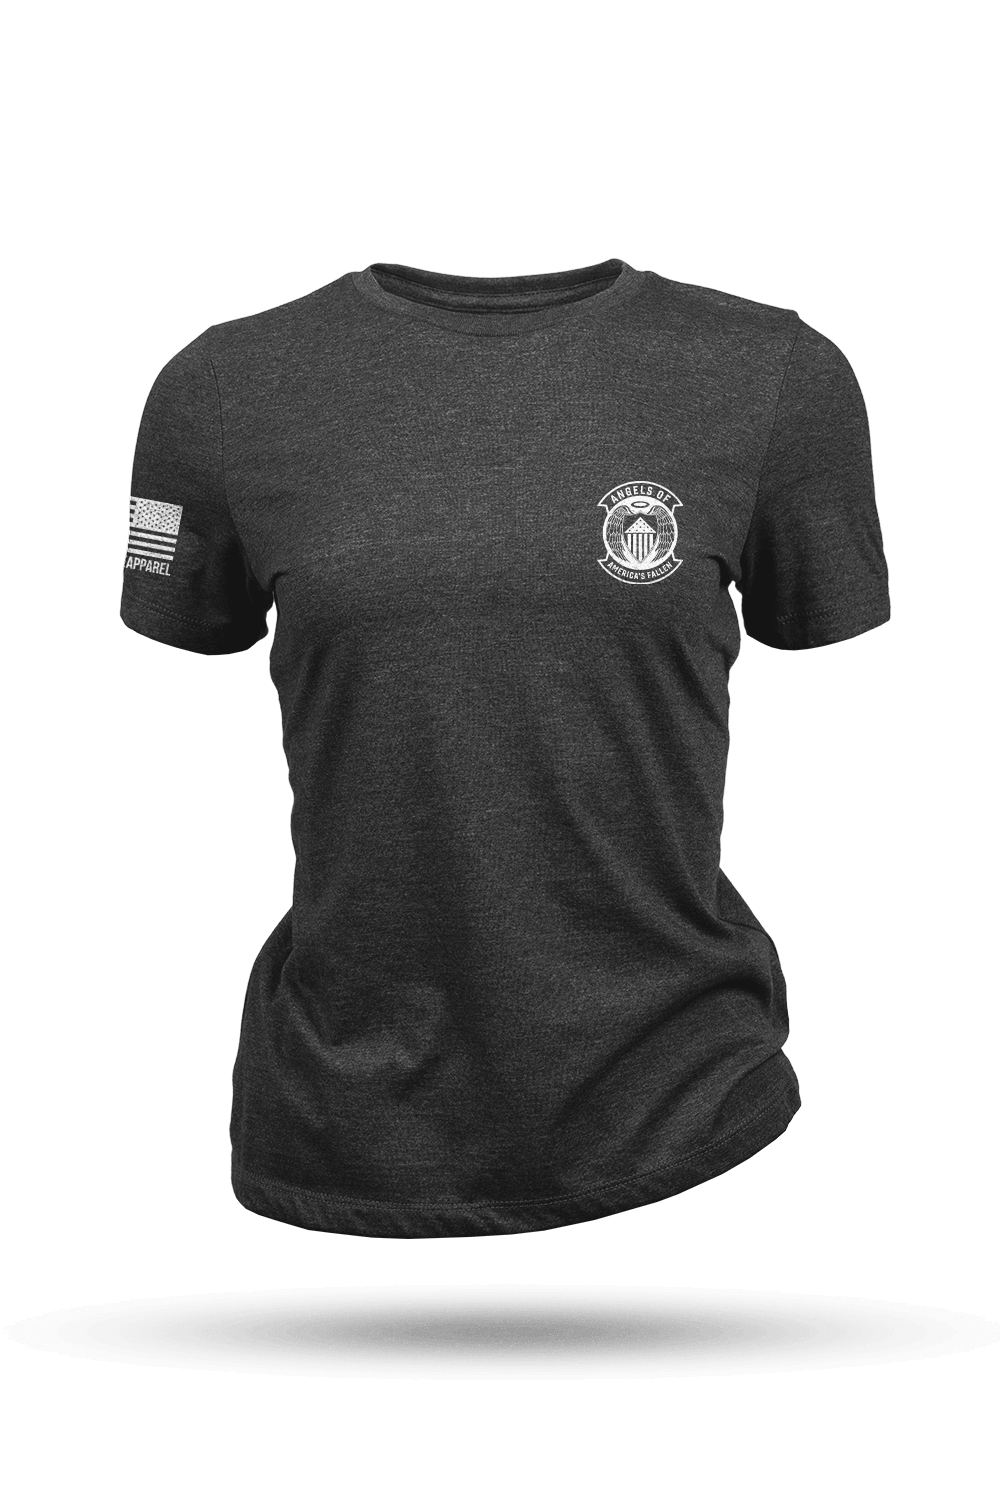 Women's T-Shirt - Angel of Americas Fallen